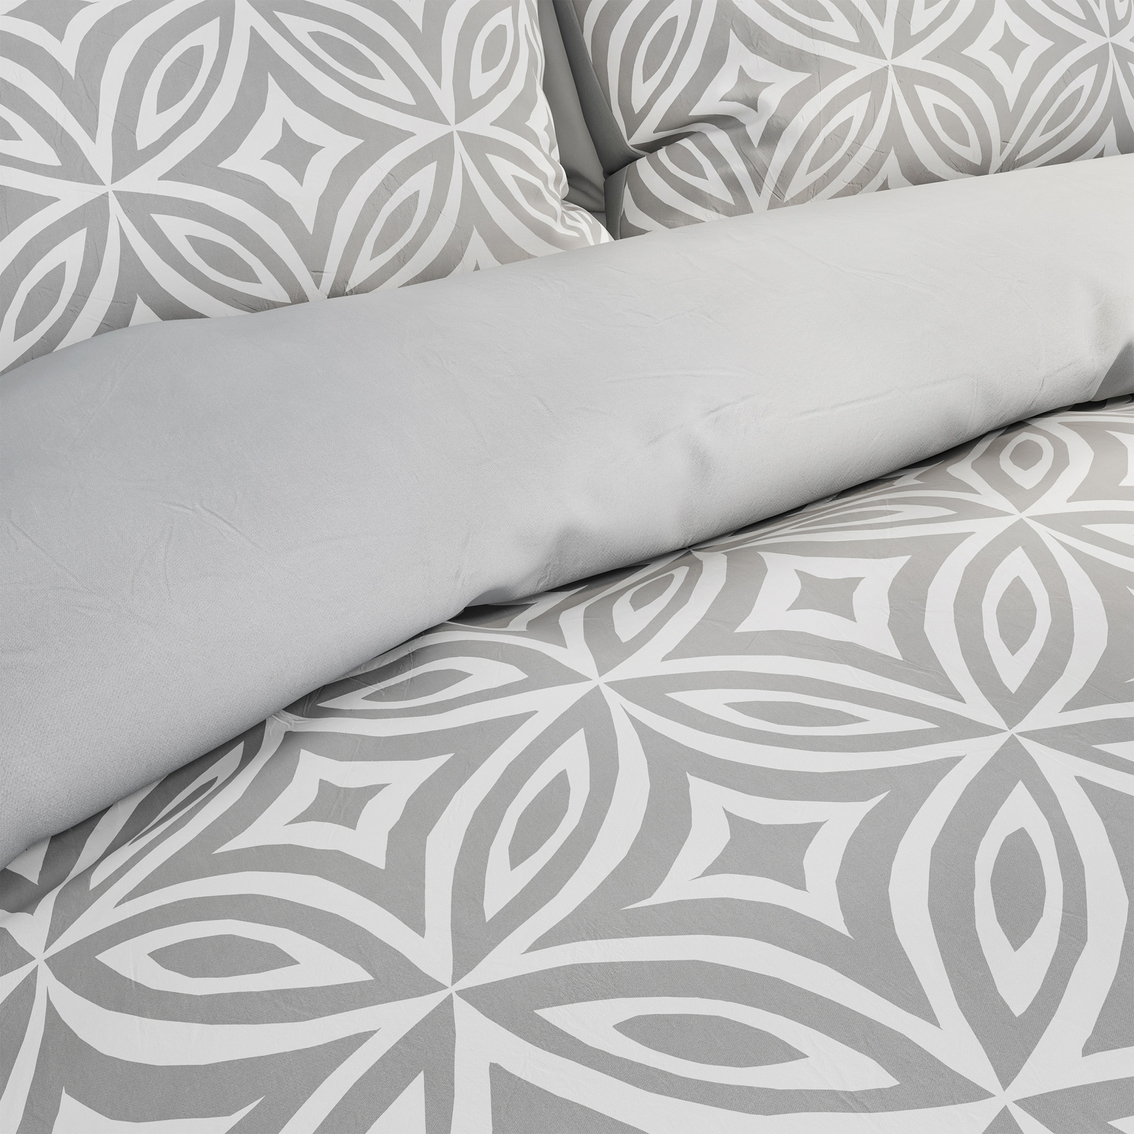 Lavish Home Radiance 3 pc. Comforter Set - Image 2 of 6